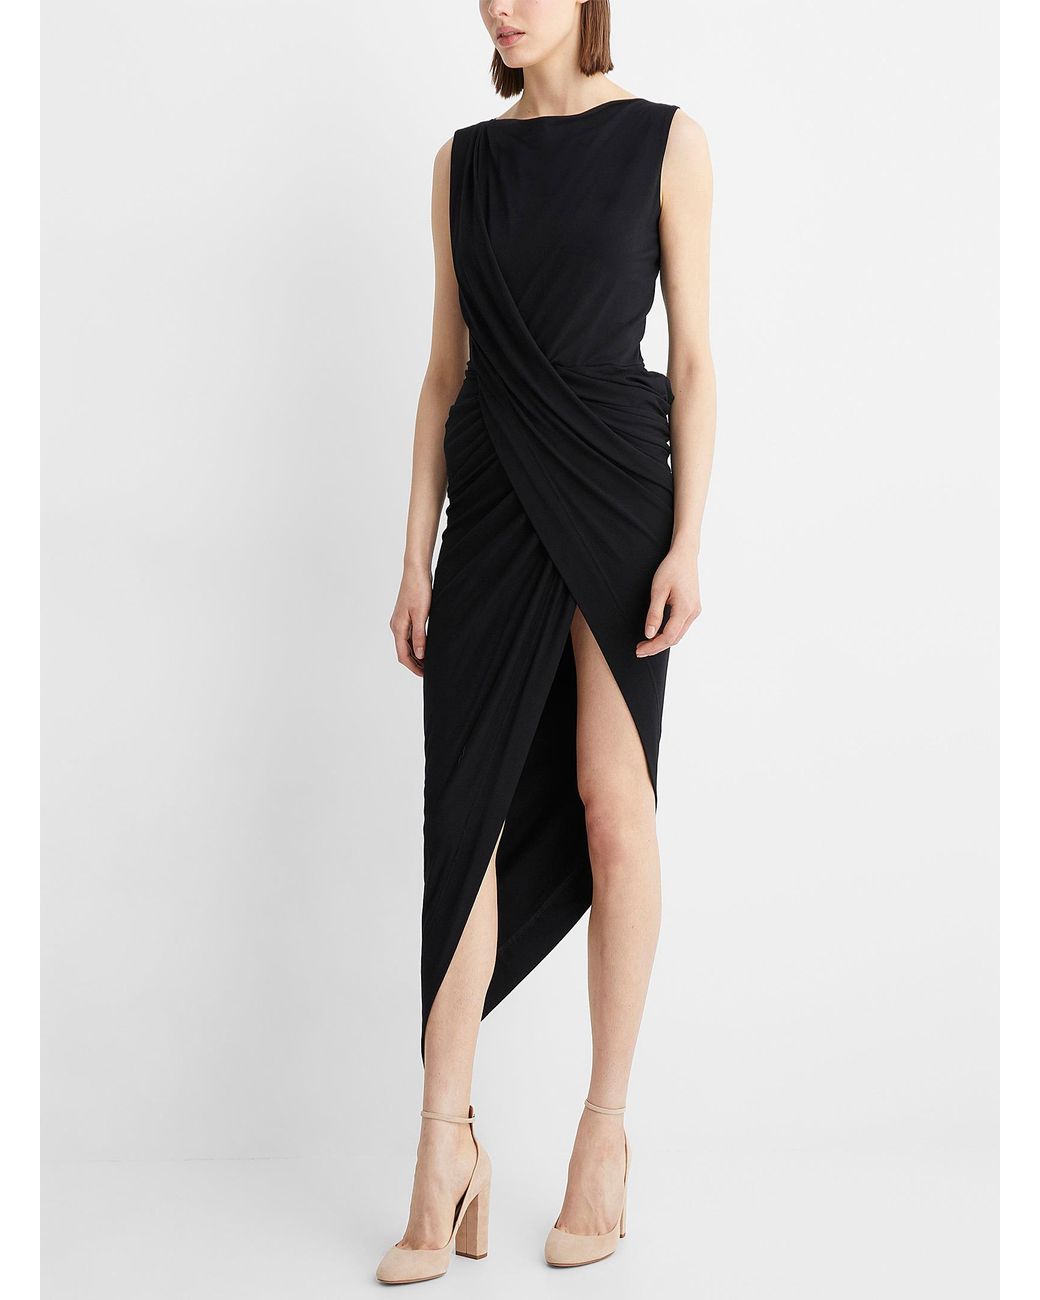 Vivienne Westwood Vian Draped Dress in Black | Lyst